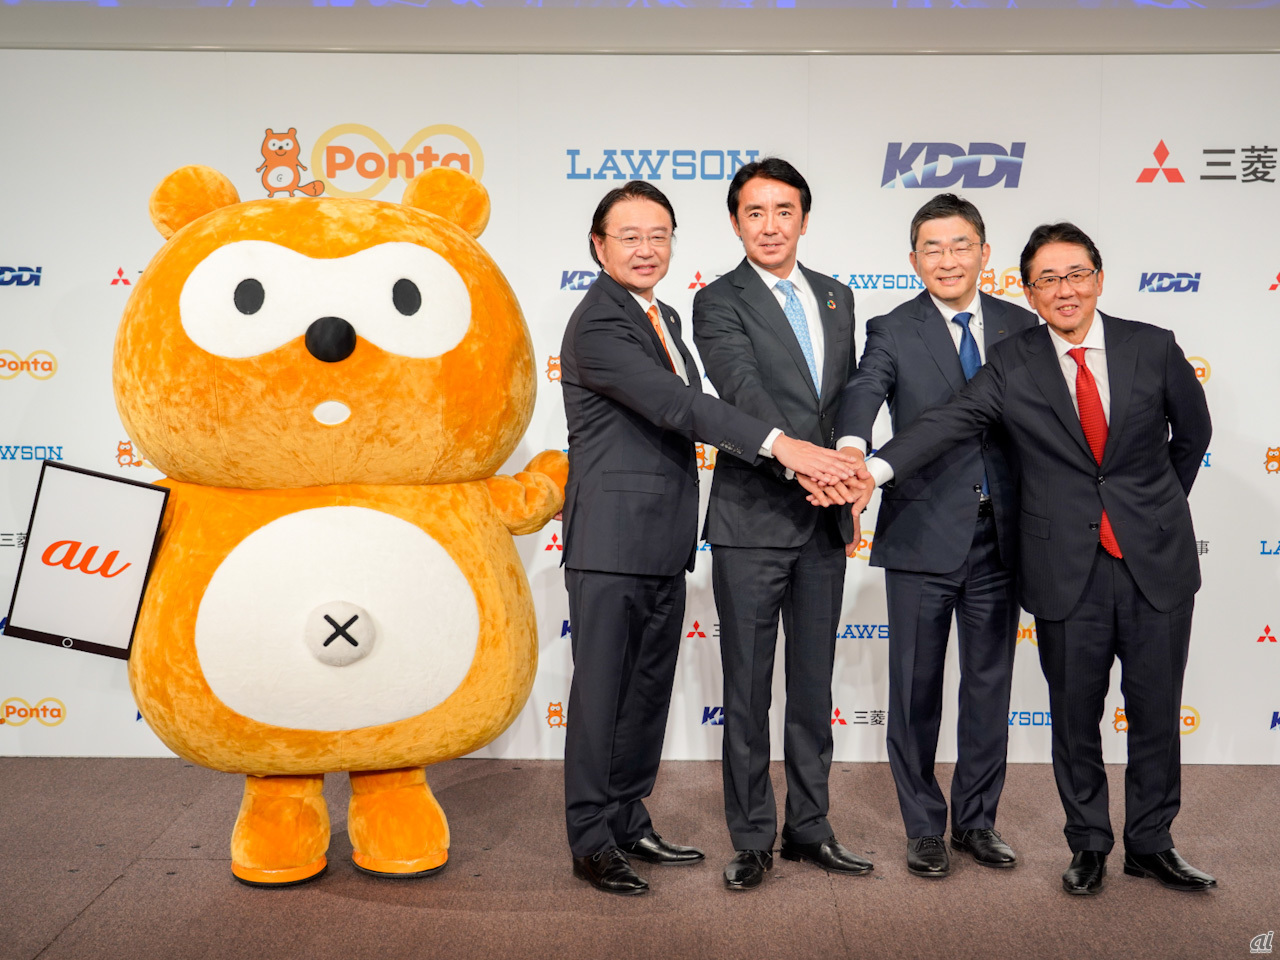 Au Wallet ポイント は Ponta に統合へ Kddiやローソン 三菱商事ら4社が提携 Cnet Japan